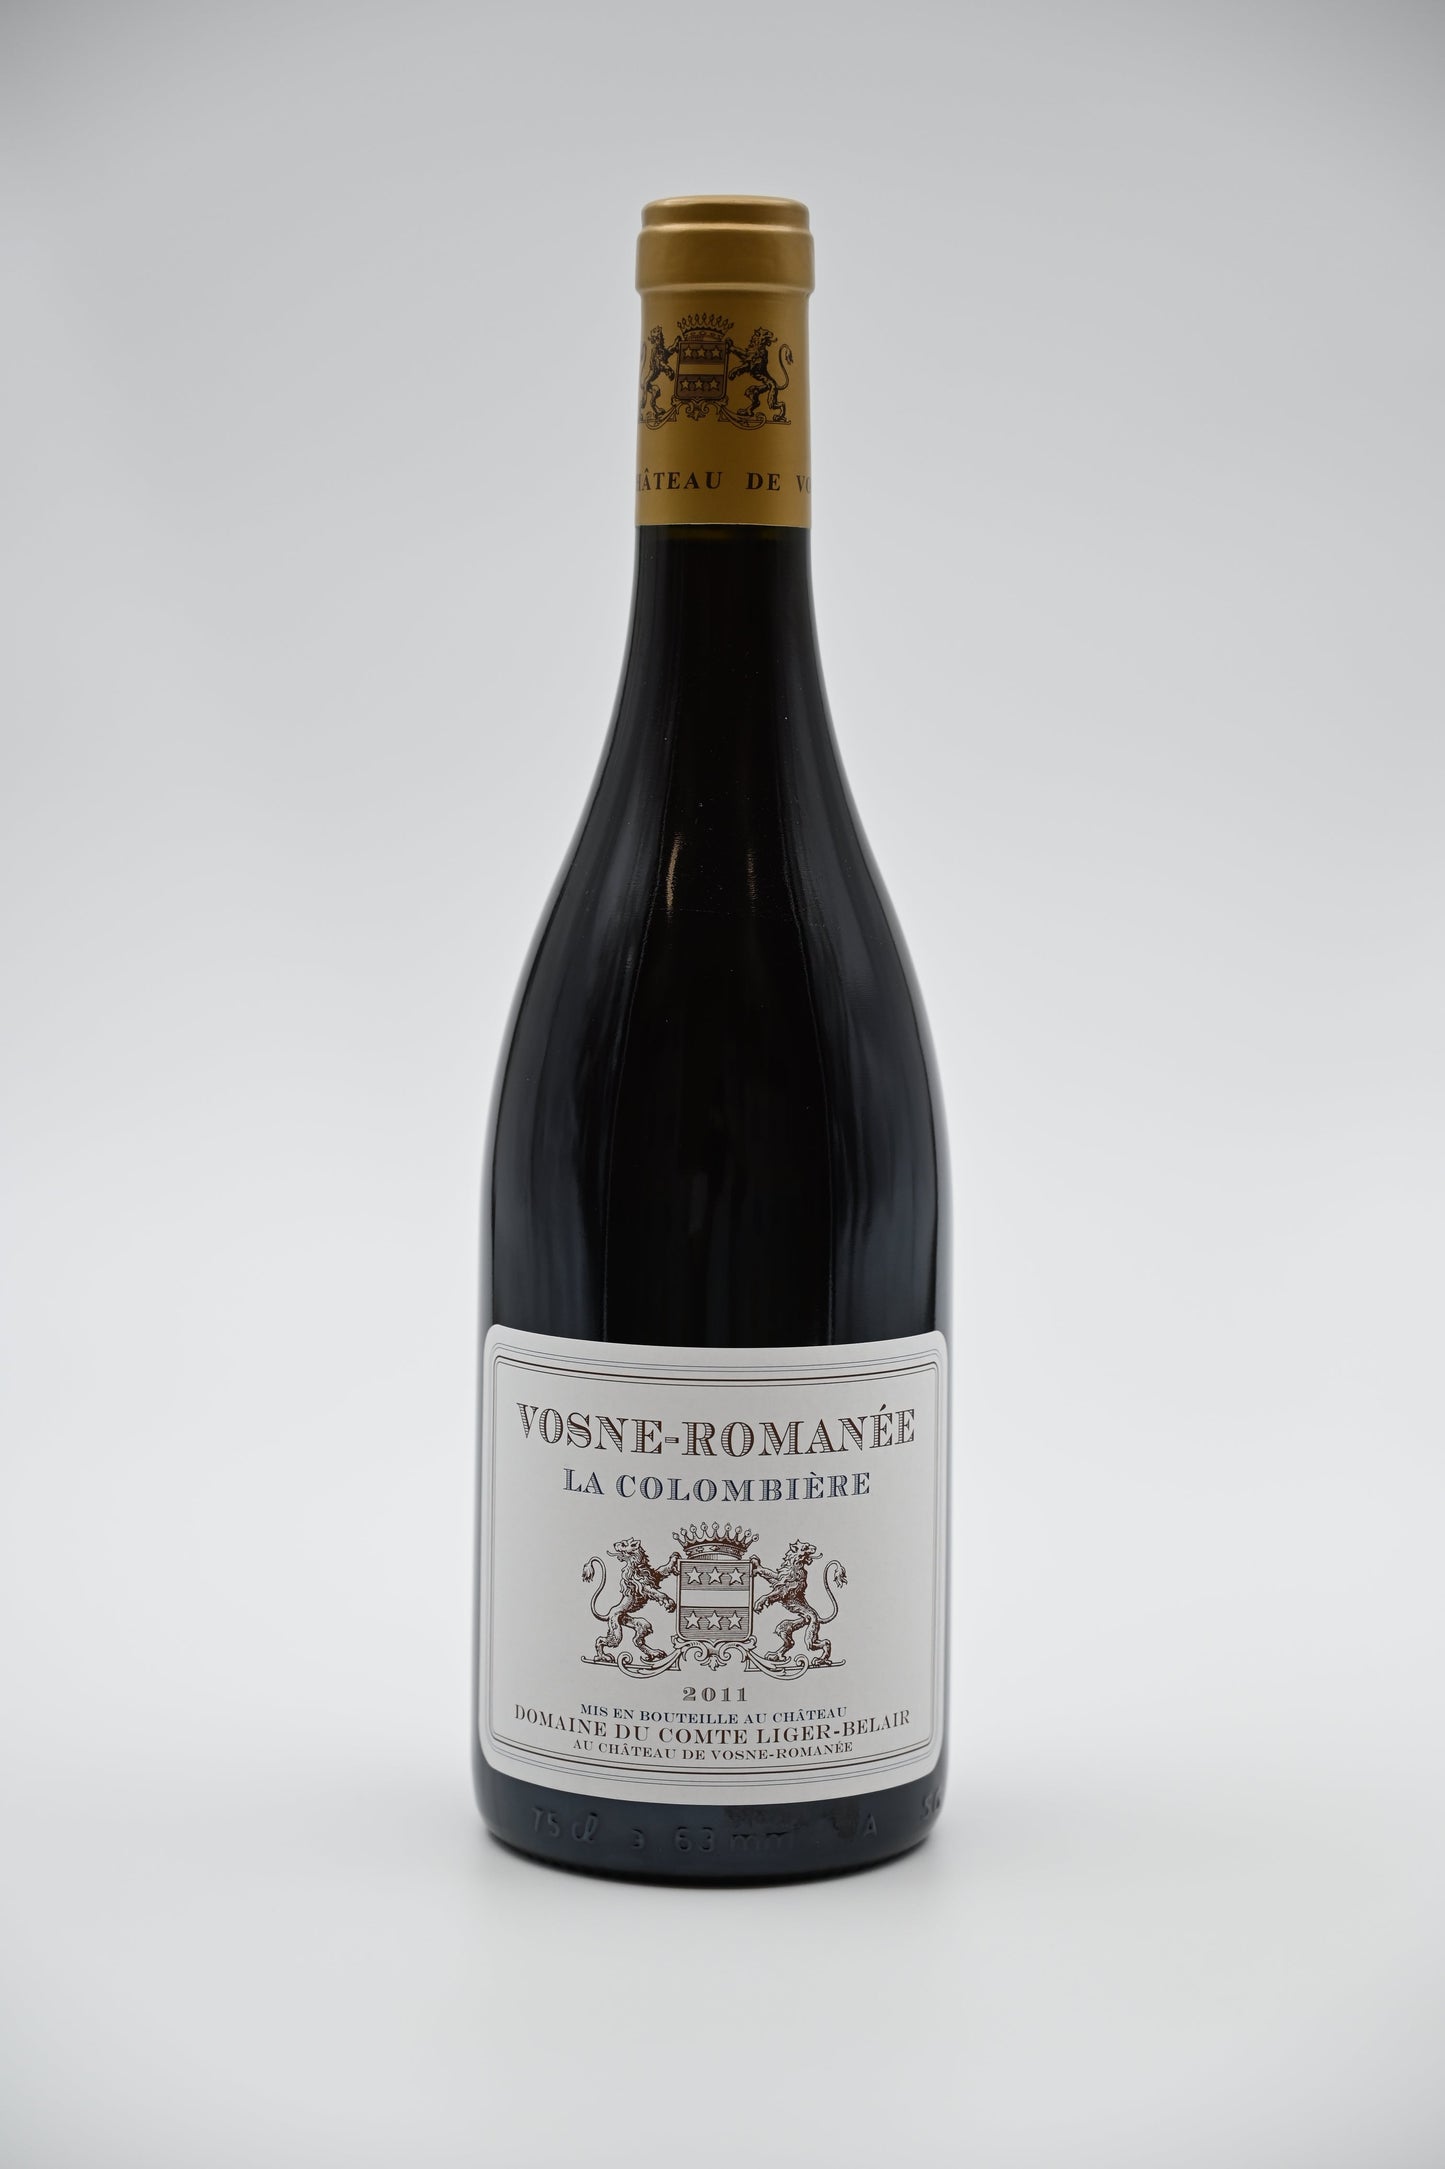 2011 Comte Liger Belair, Vosne Romanee 沃恩罗曼尼村 红葡萄酒 李白里贝伯爵酒庄 La Colombiere 